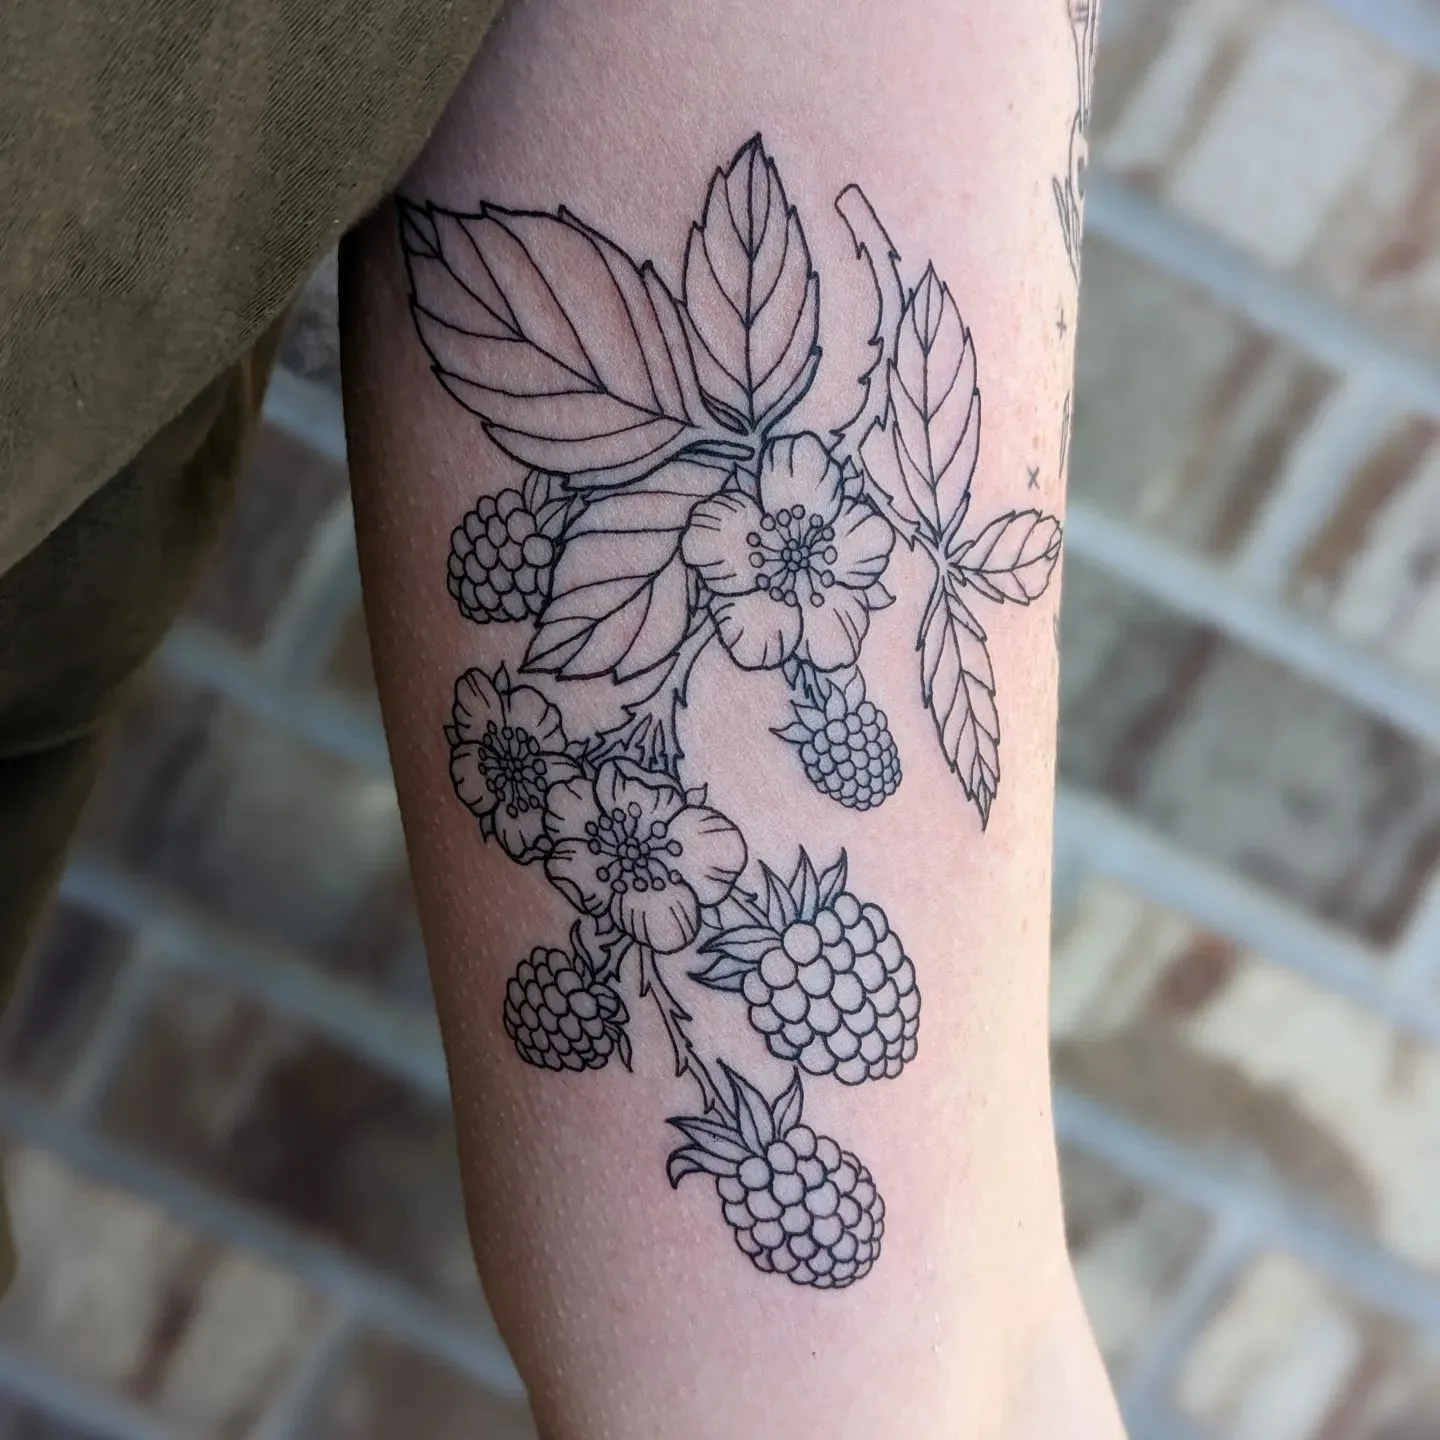 Delicate blackberry bush sketch on forearm